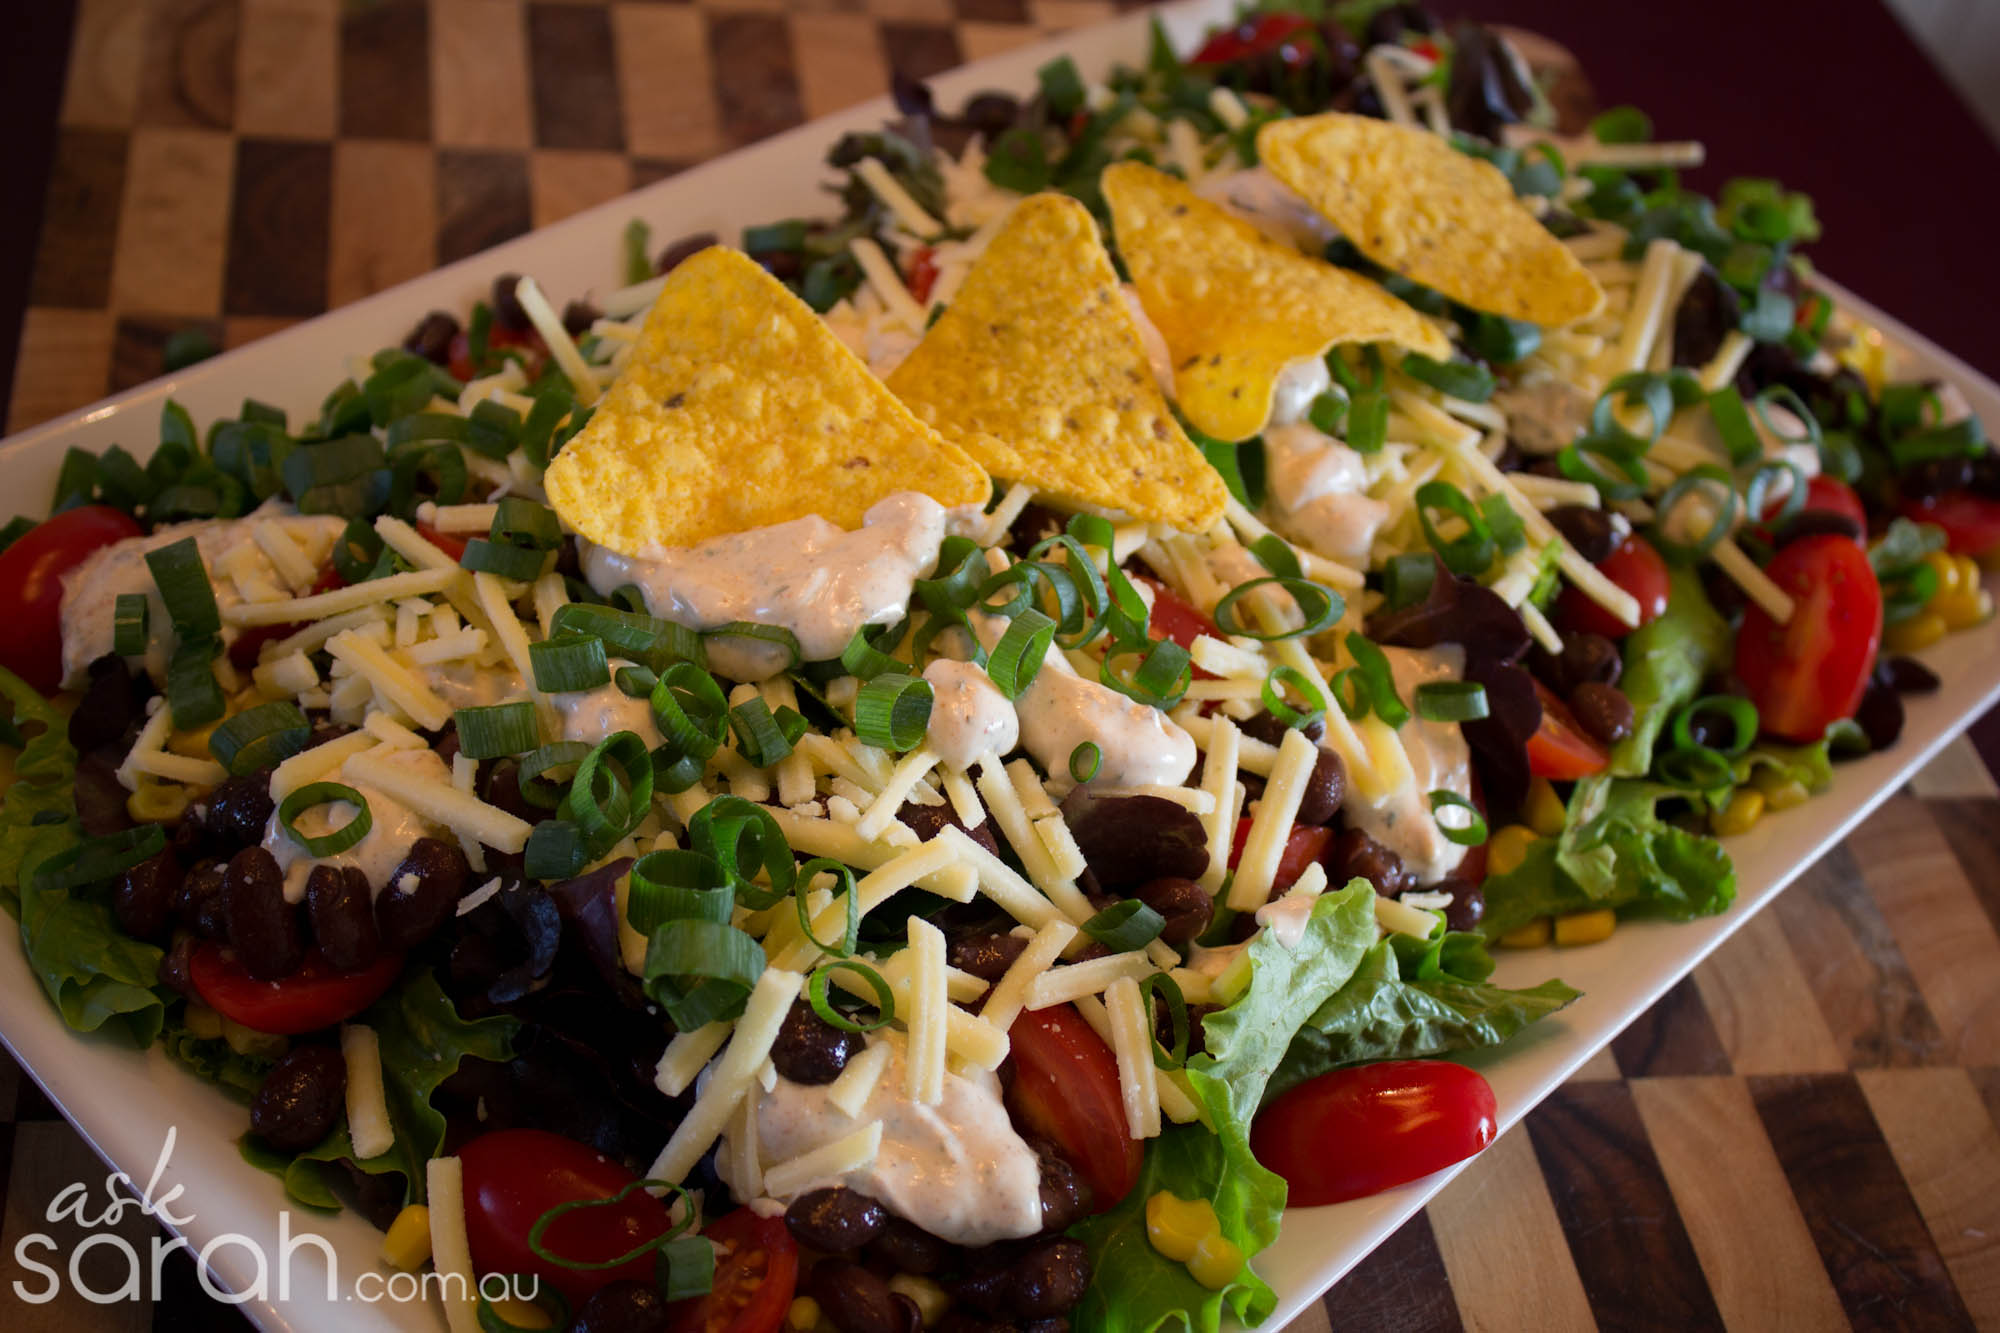  Recipe: Cool Ranch Taco Salad